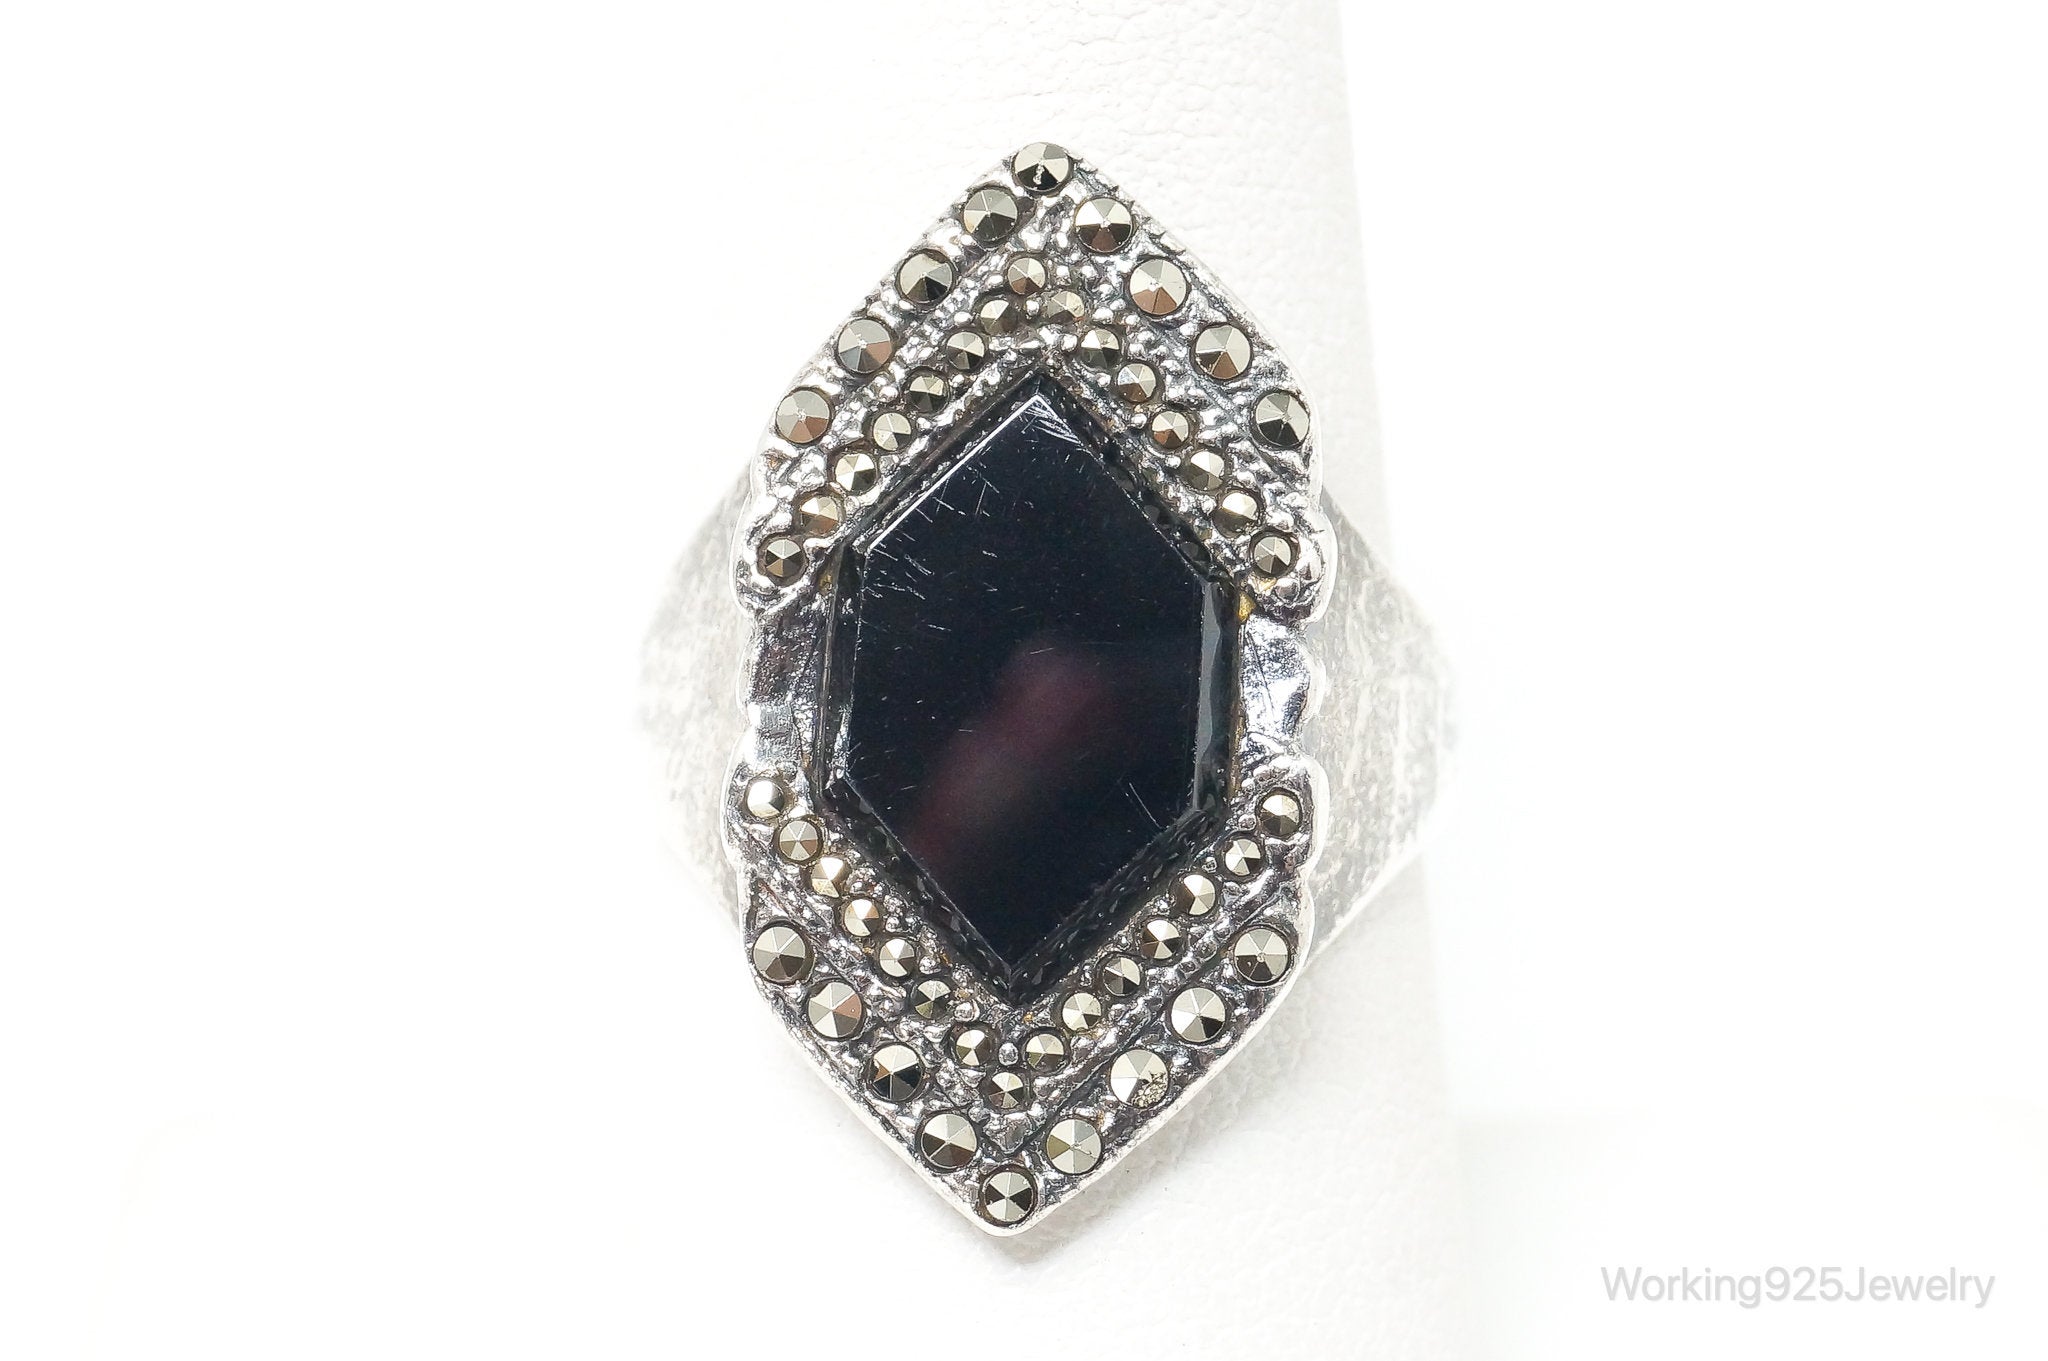 VTG Art Deco Marcasite Black Onyx Sterling Silver Statement Ring - SZ 7.5